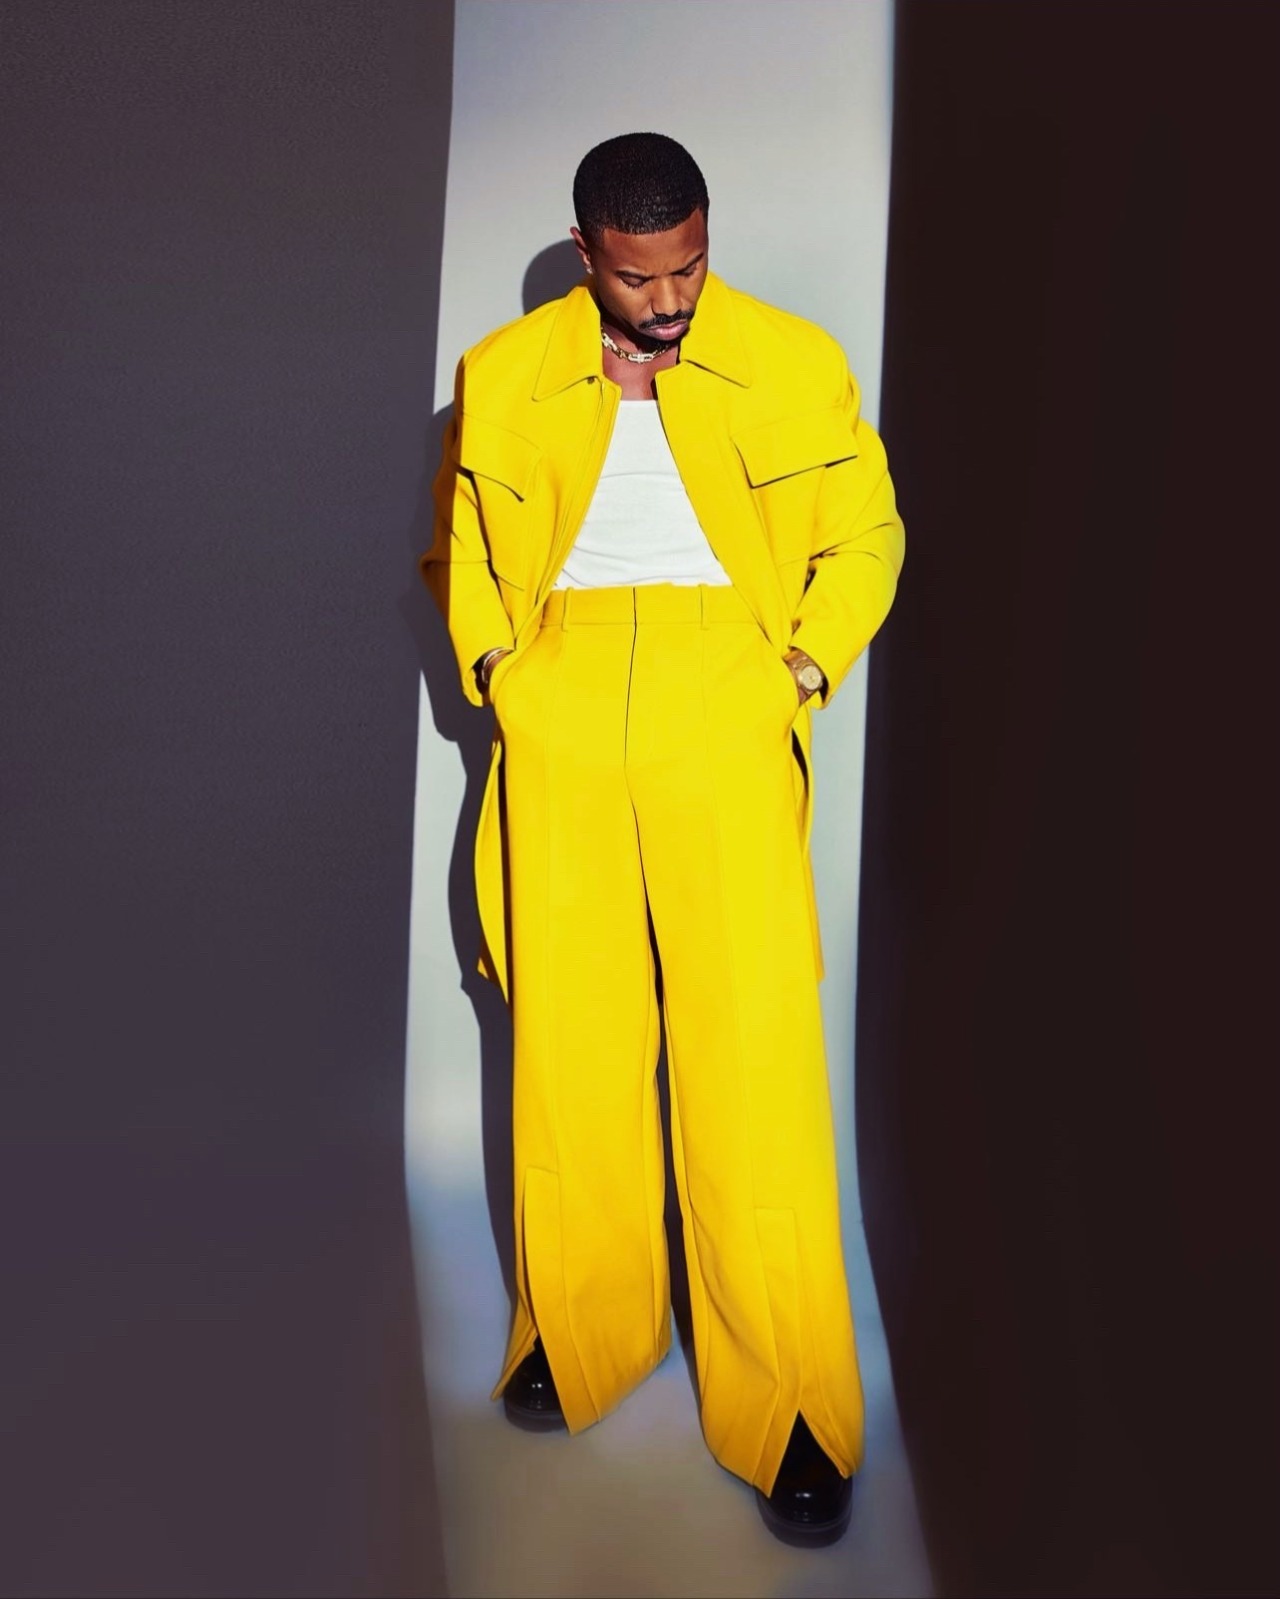 Michael B. Jordan Shines in Yellow Louis Vuitton for 'Black